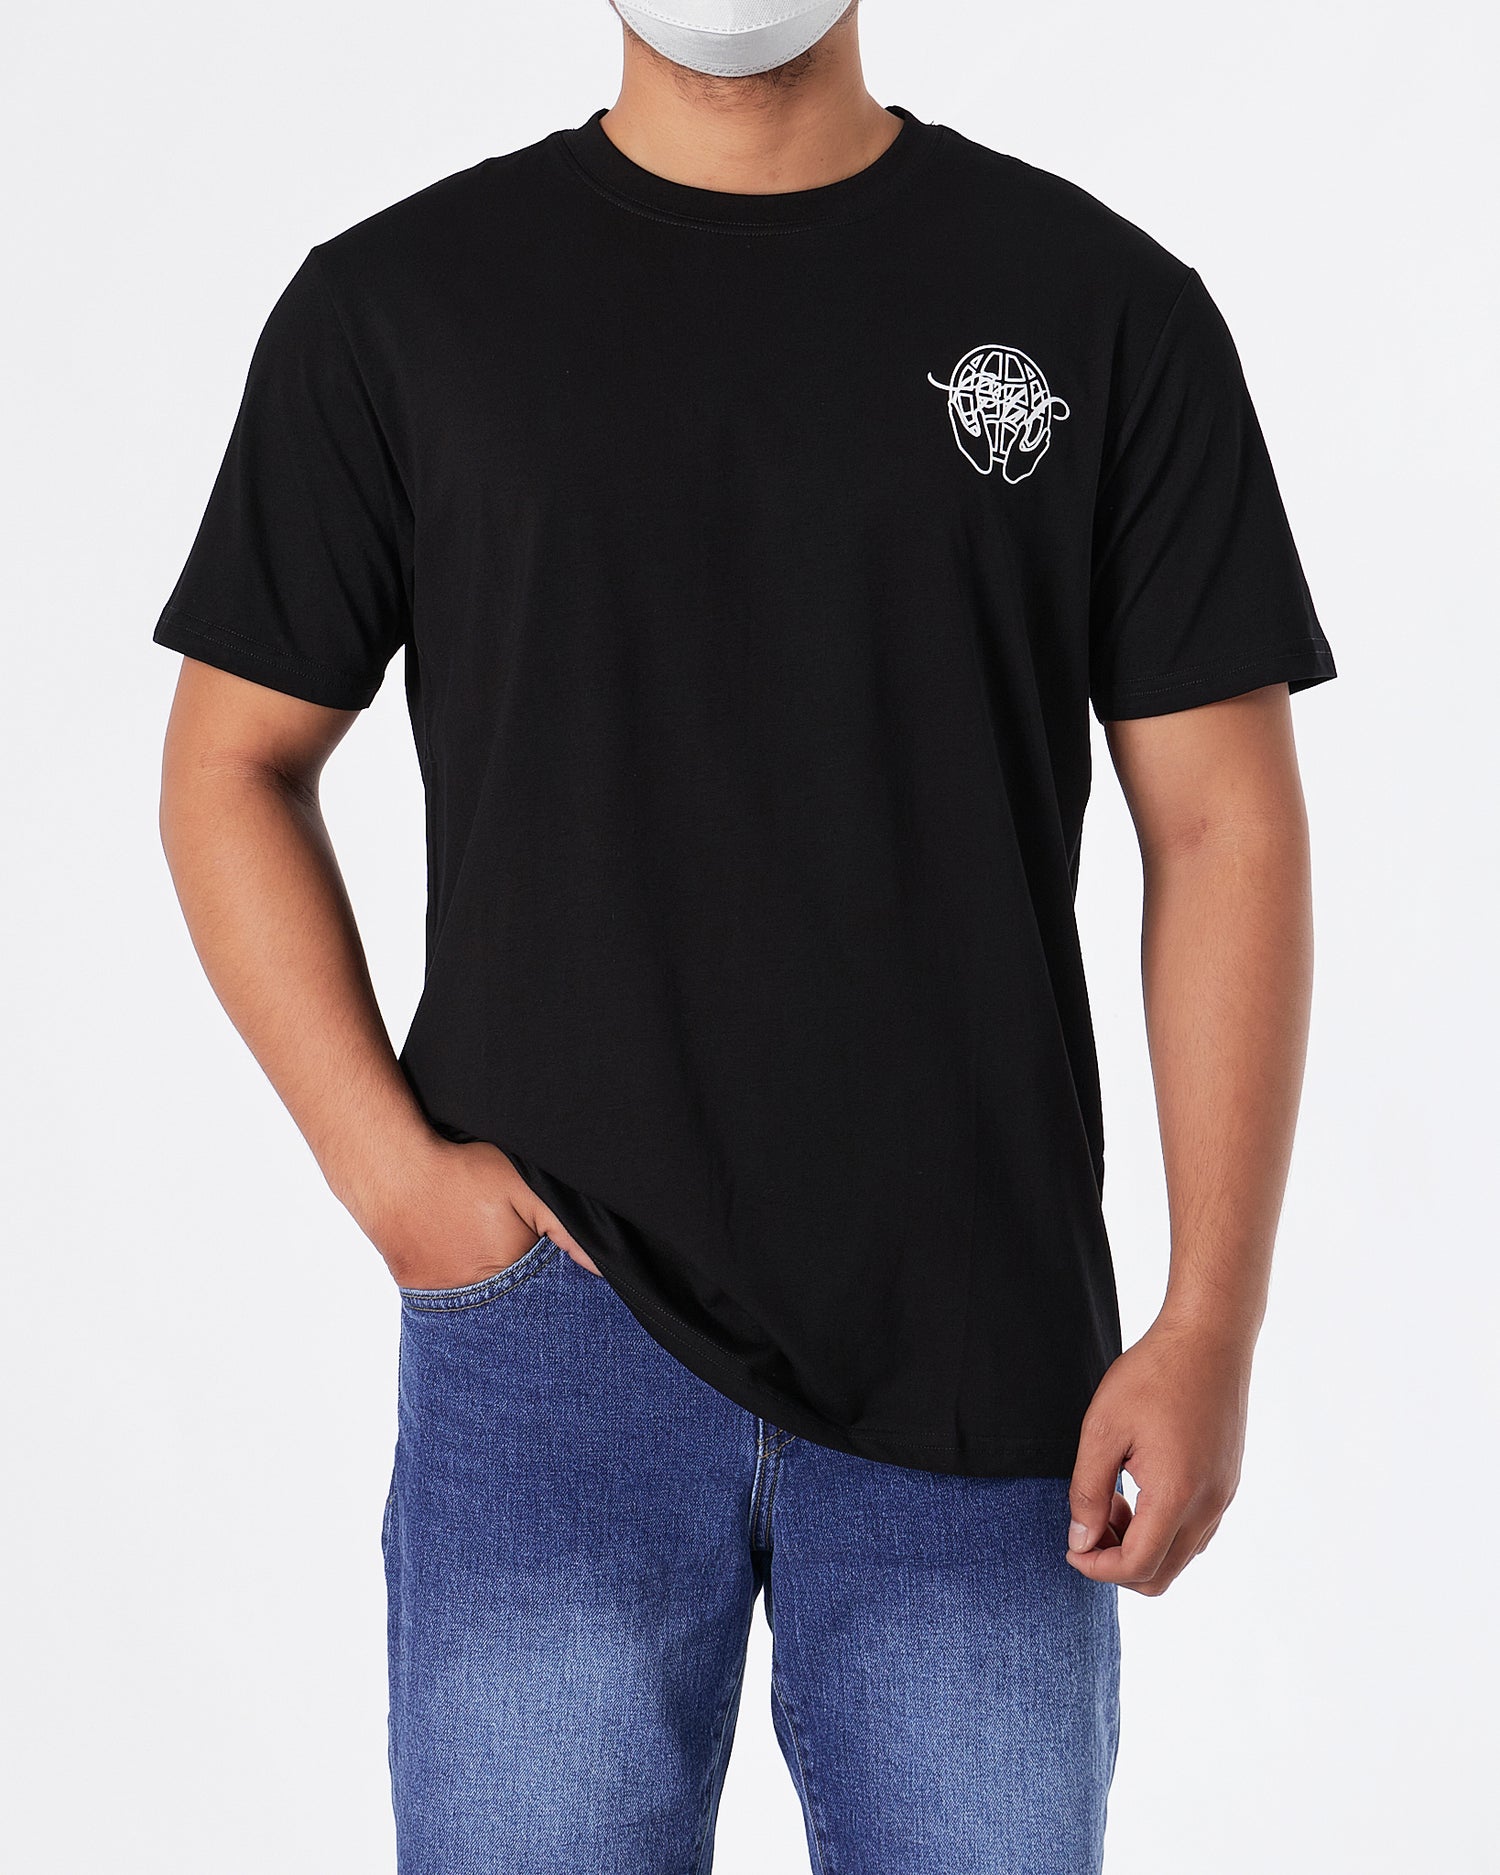 OW Cross Arrow Back Printed Men Black T-Shirt 20.90